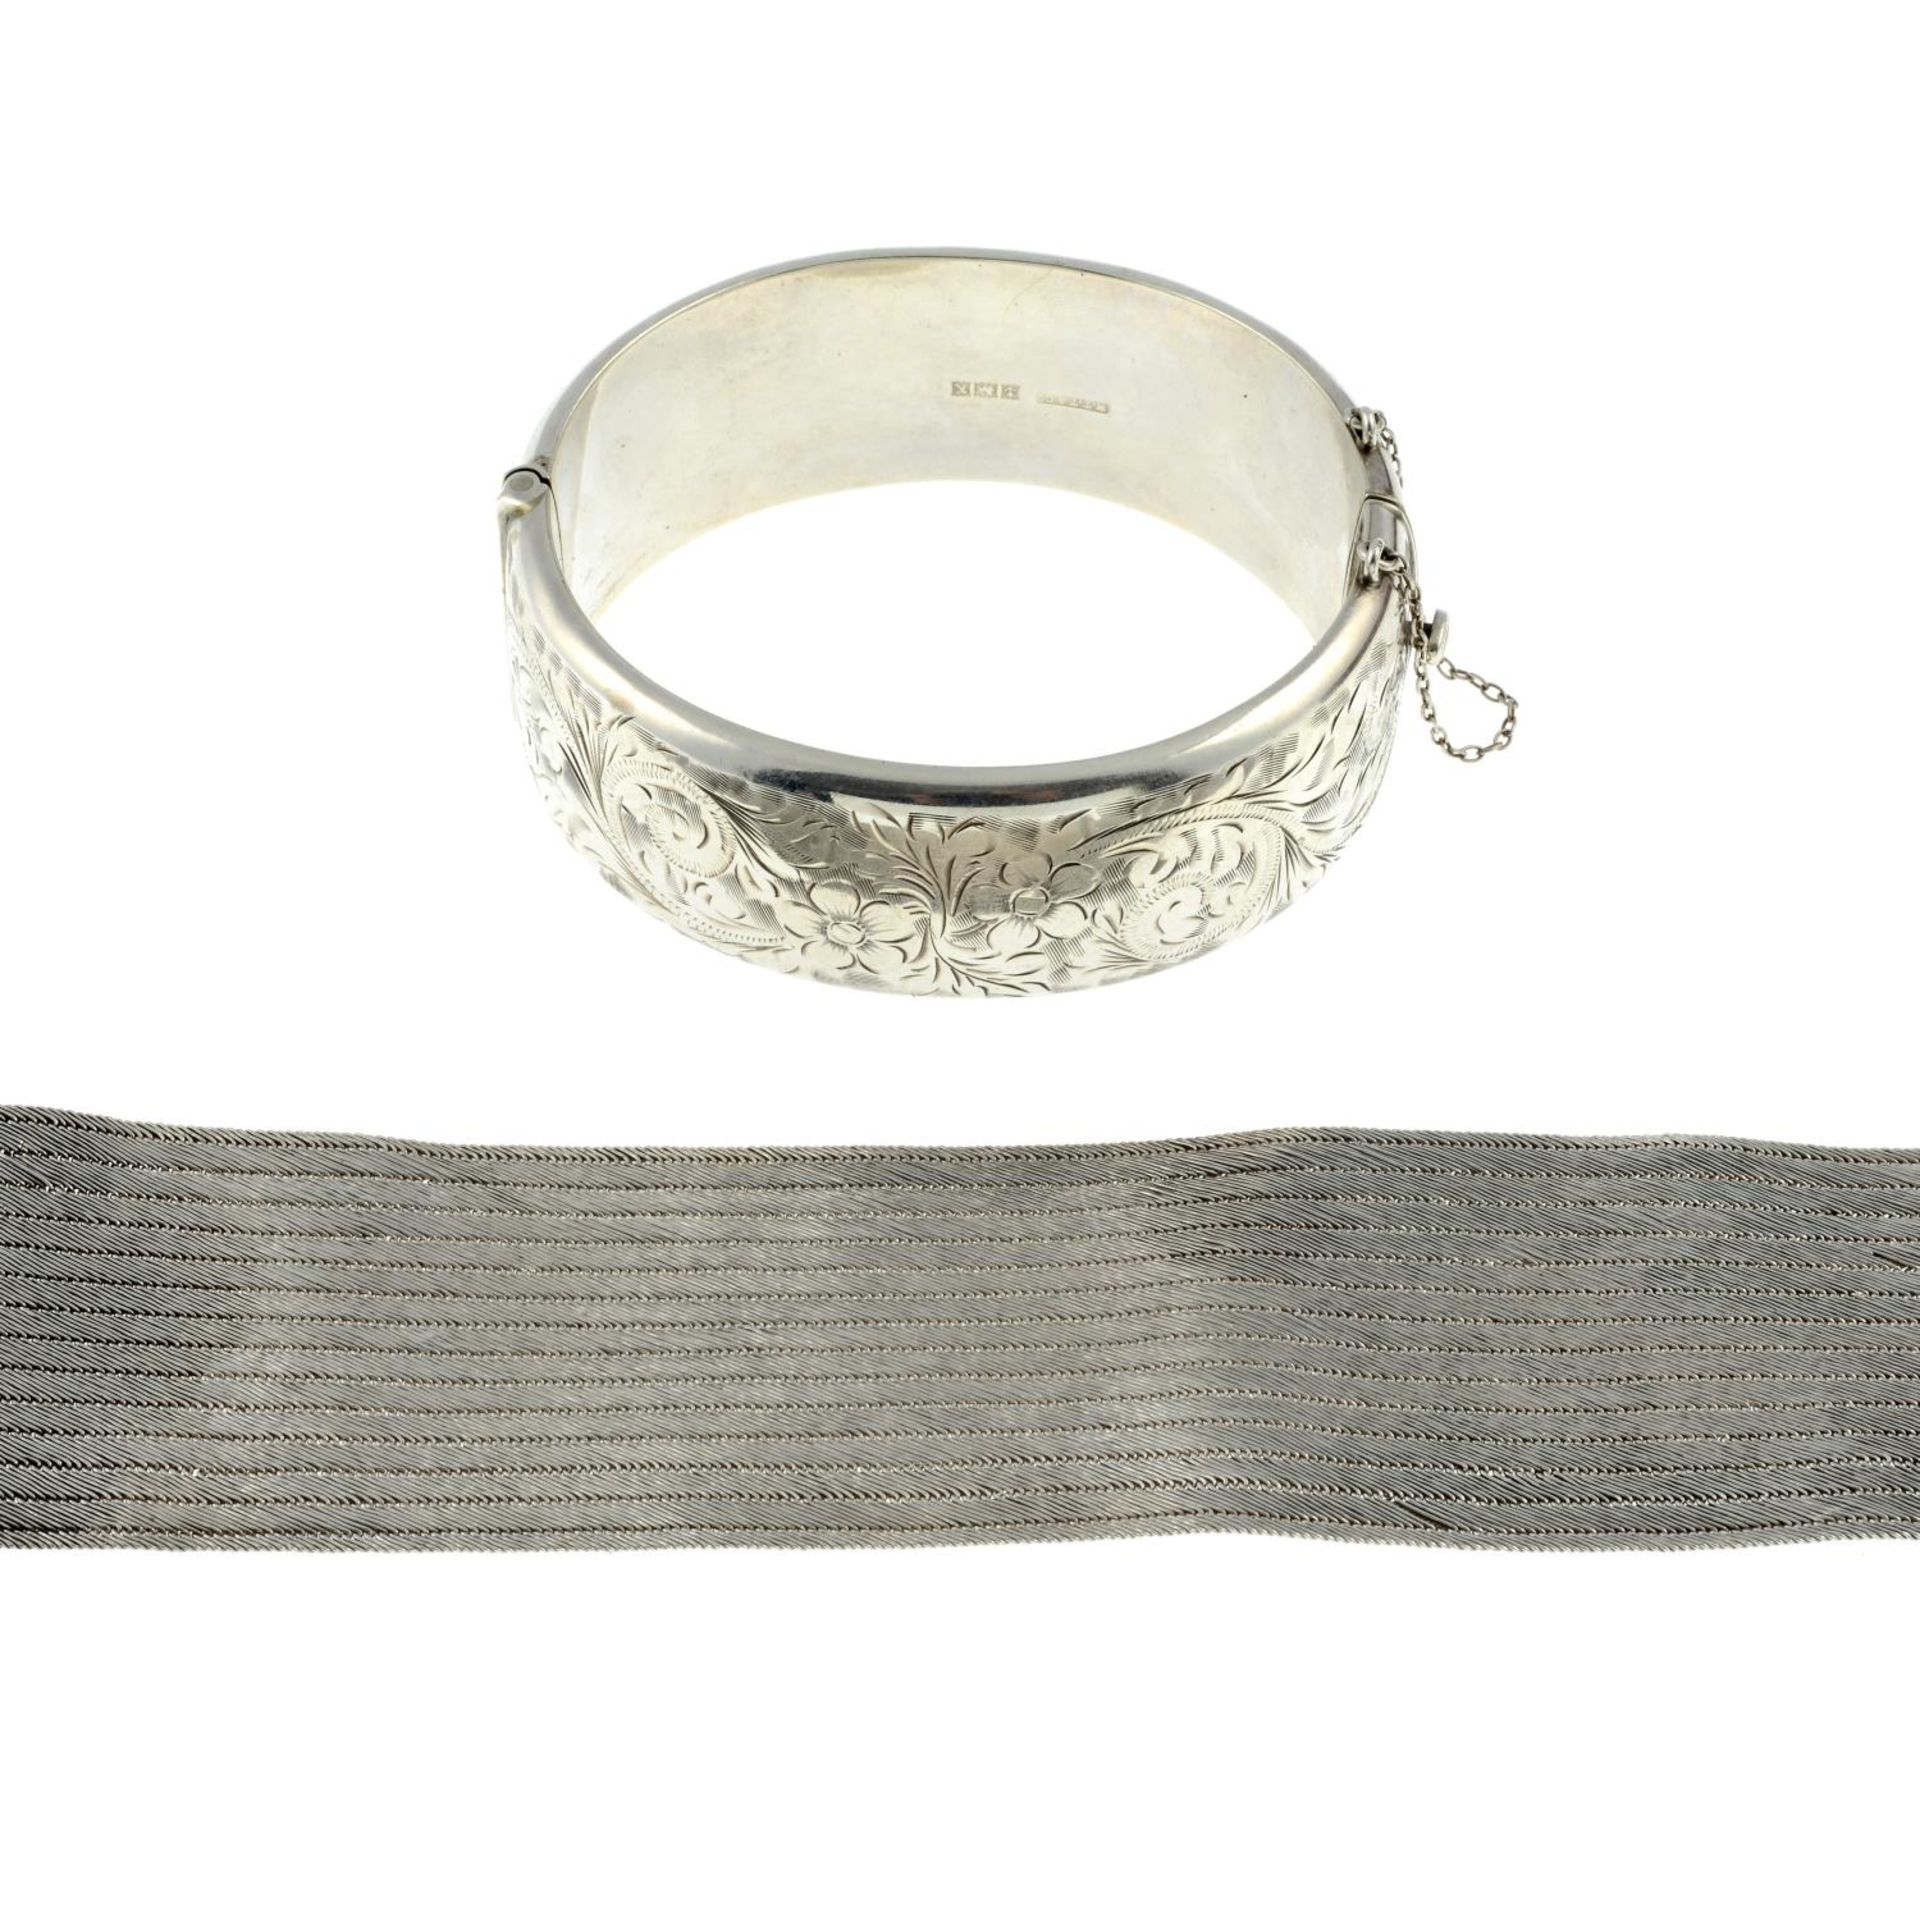 A silver bangle and a bracelet.